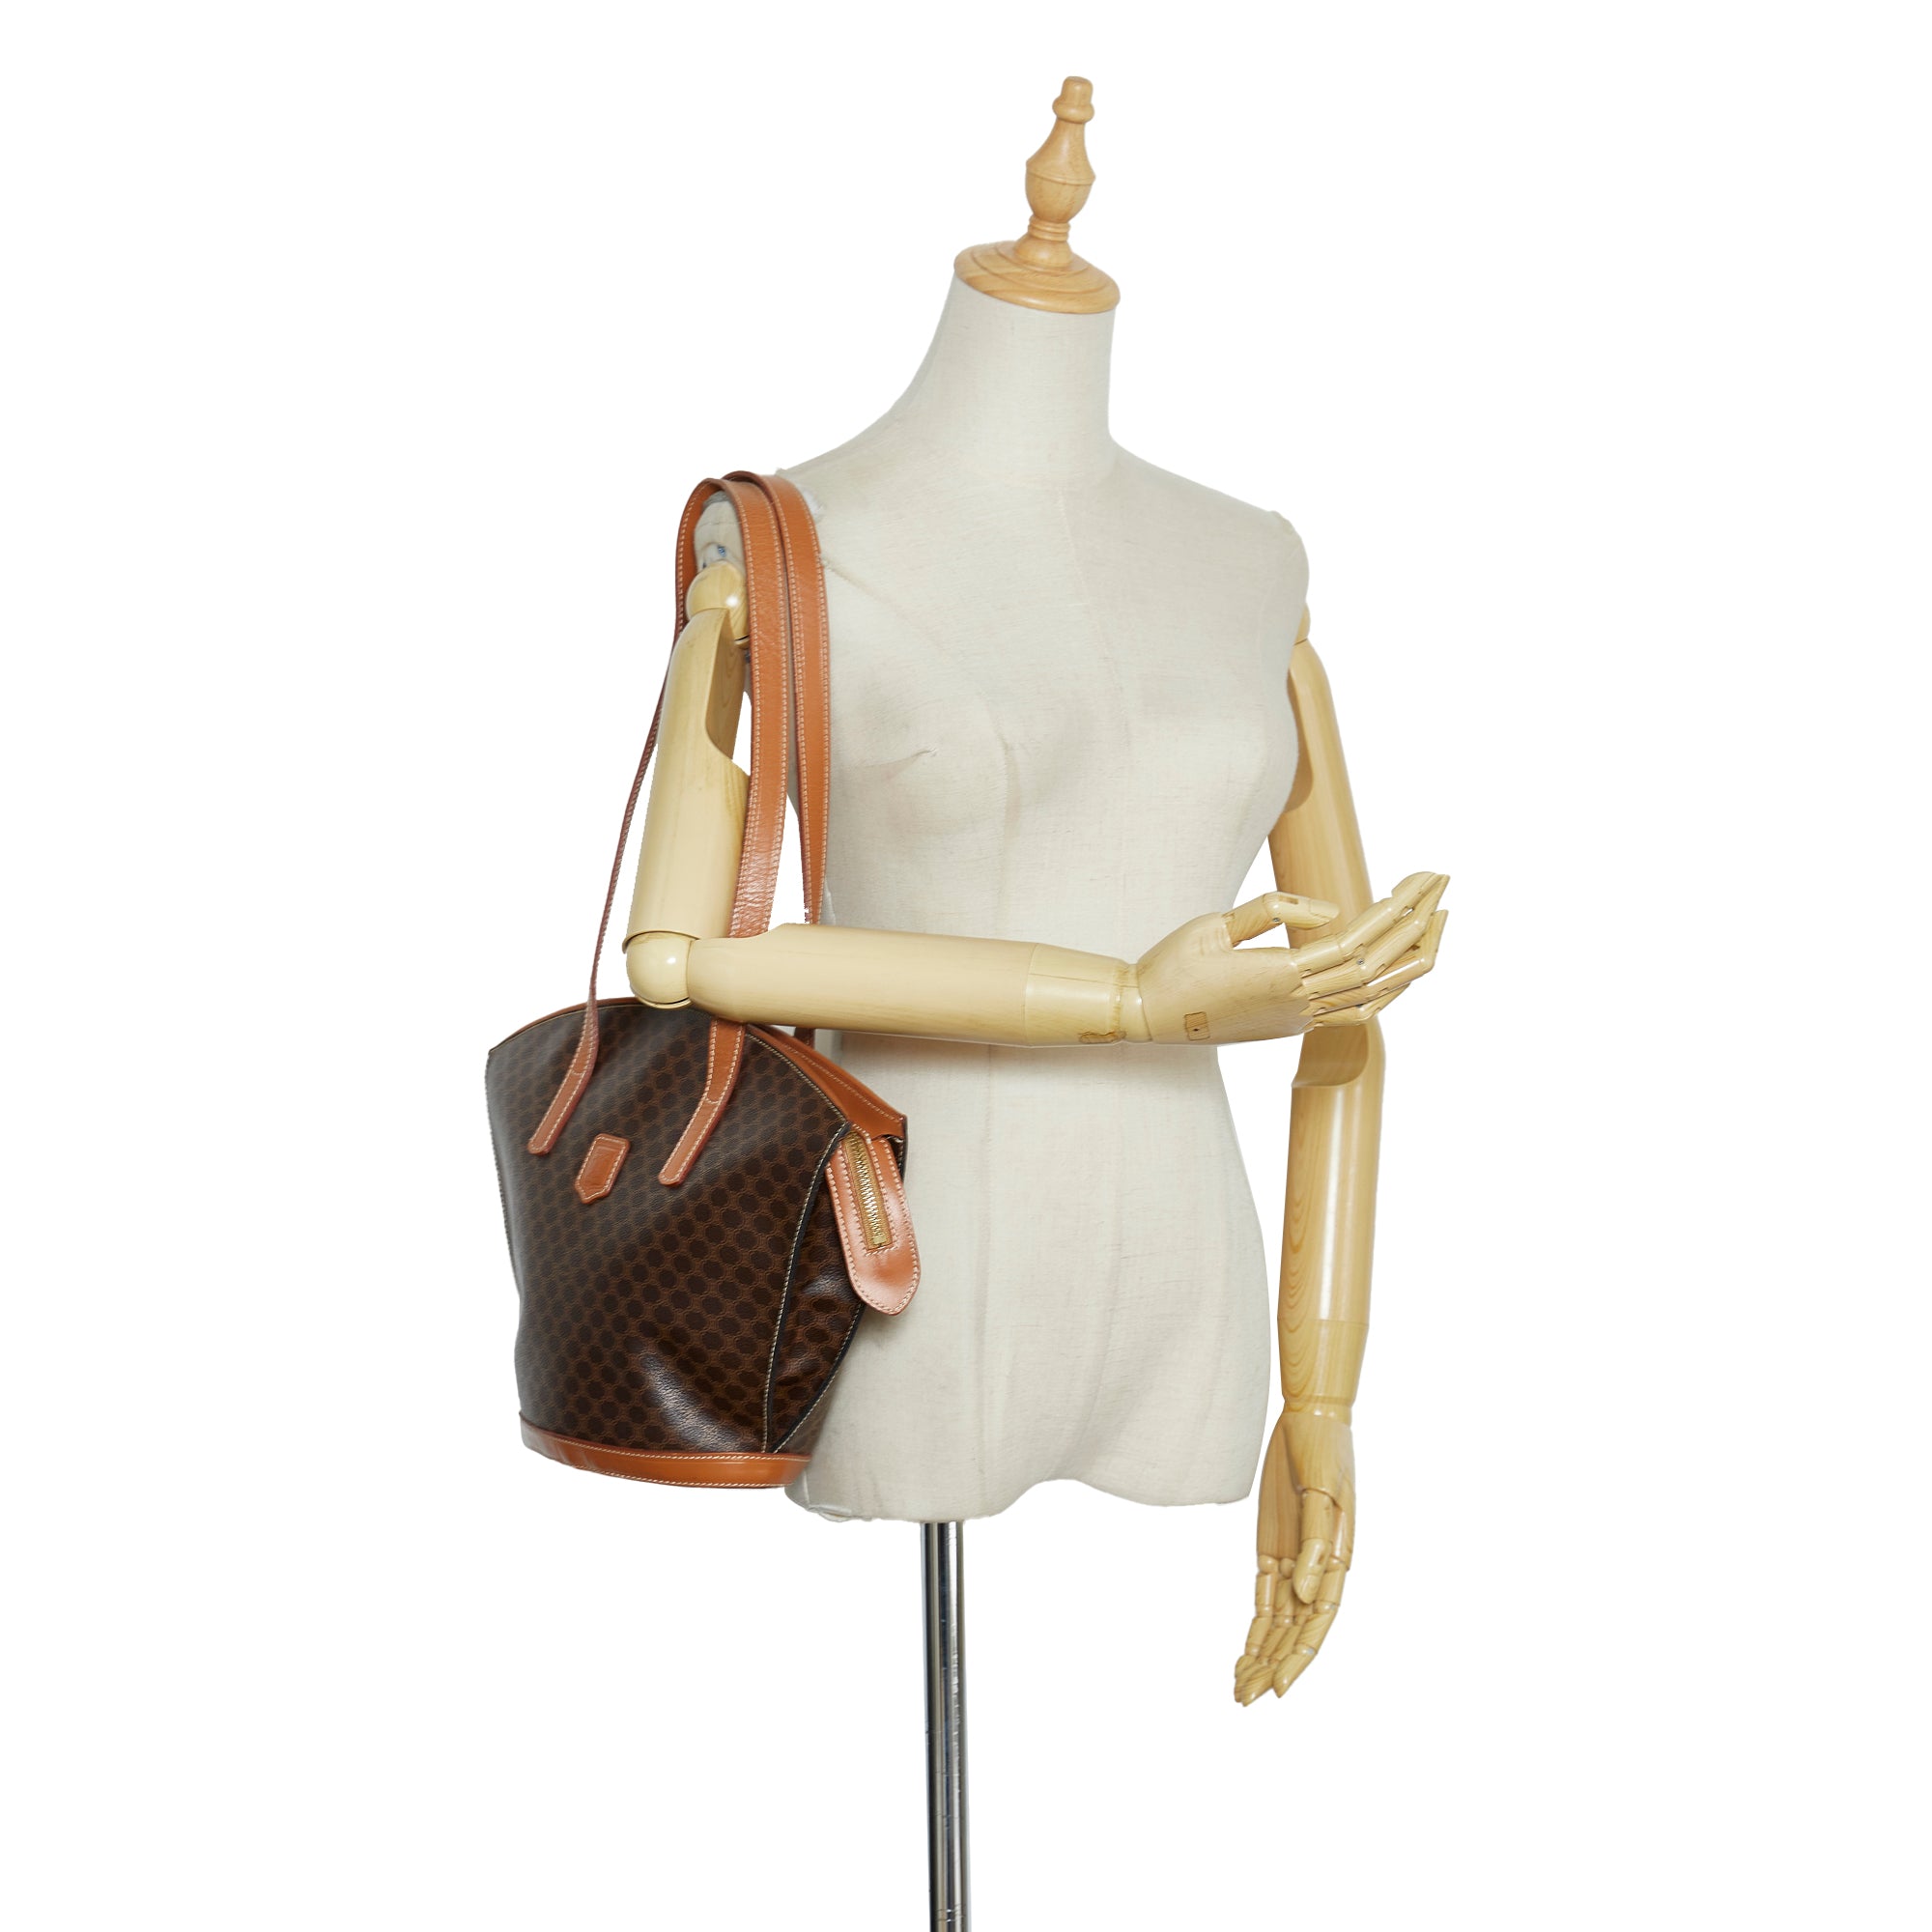 Brown Celine Macadam Shoulder Bag